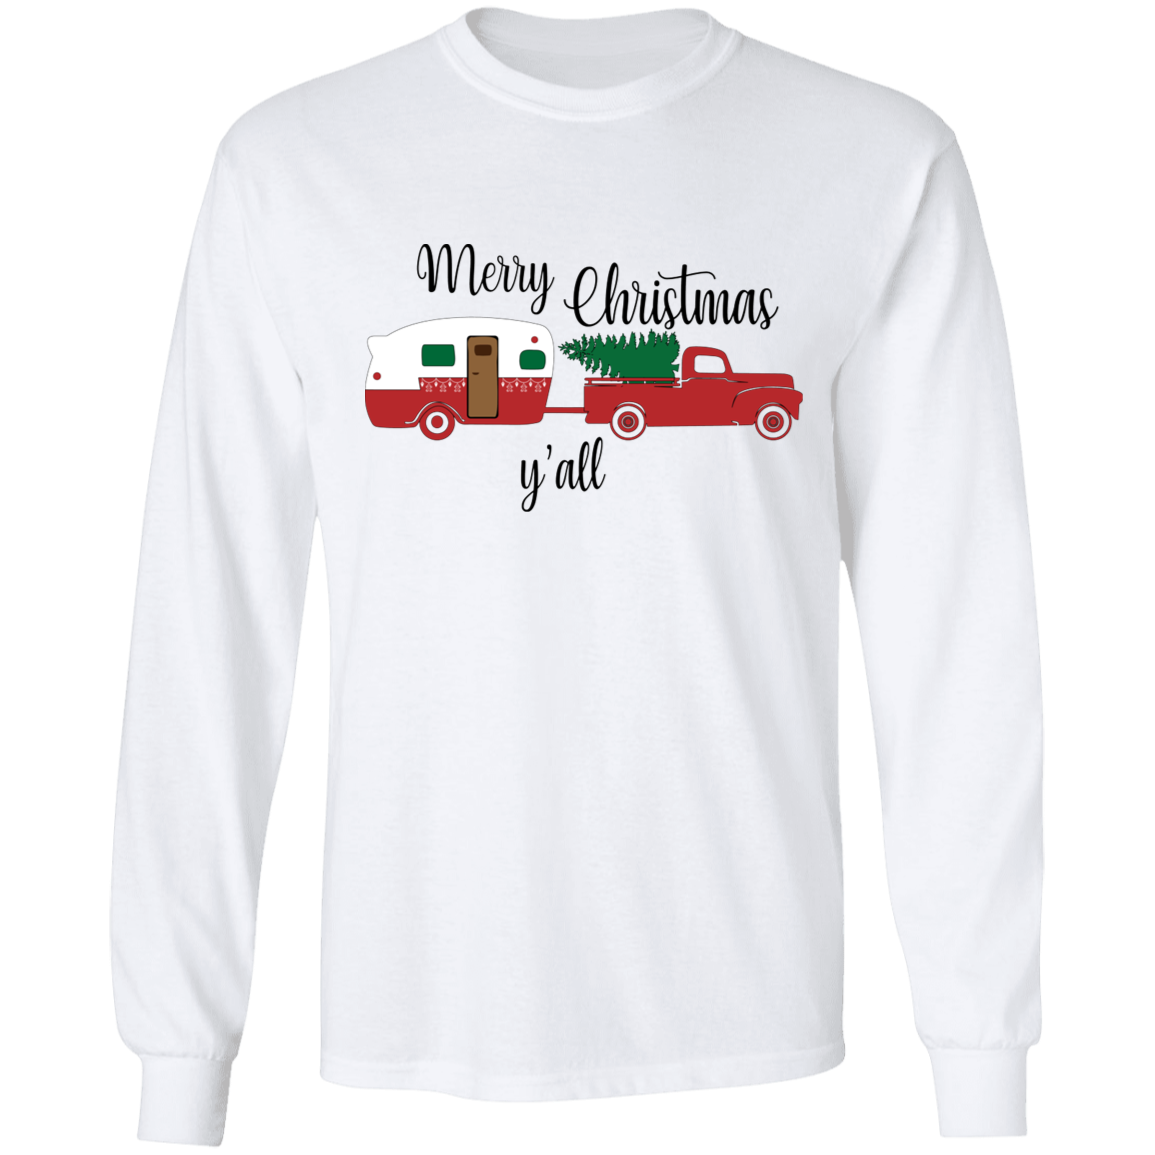 Merry Christmas camper long sleeve T'shirt